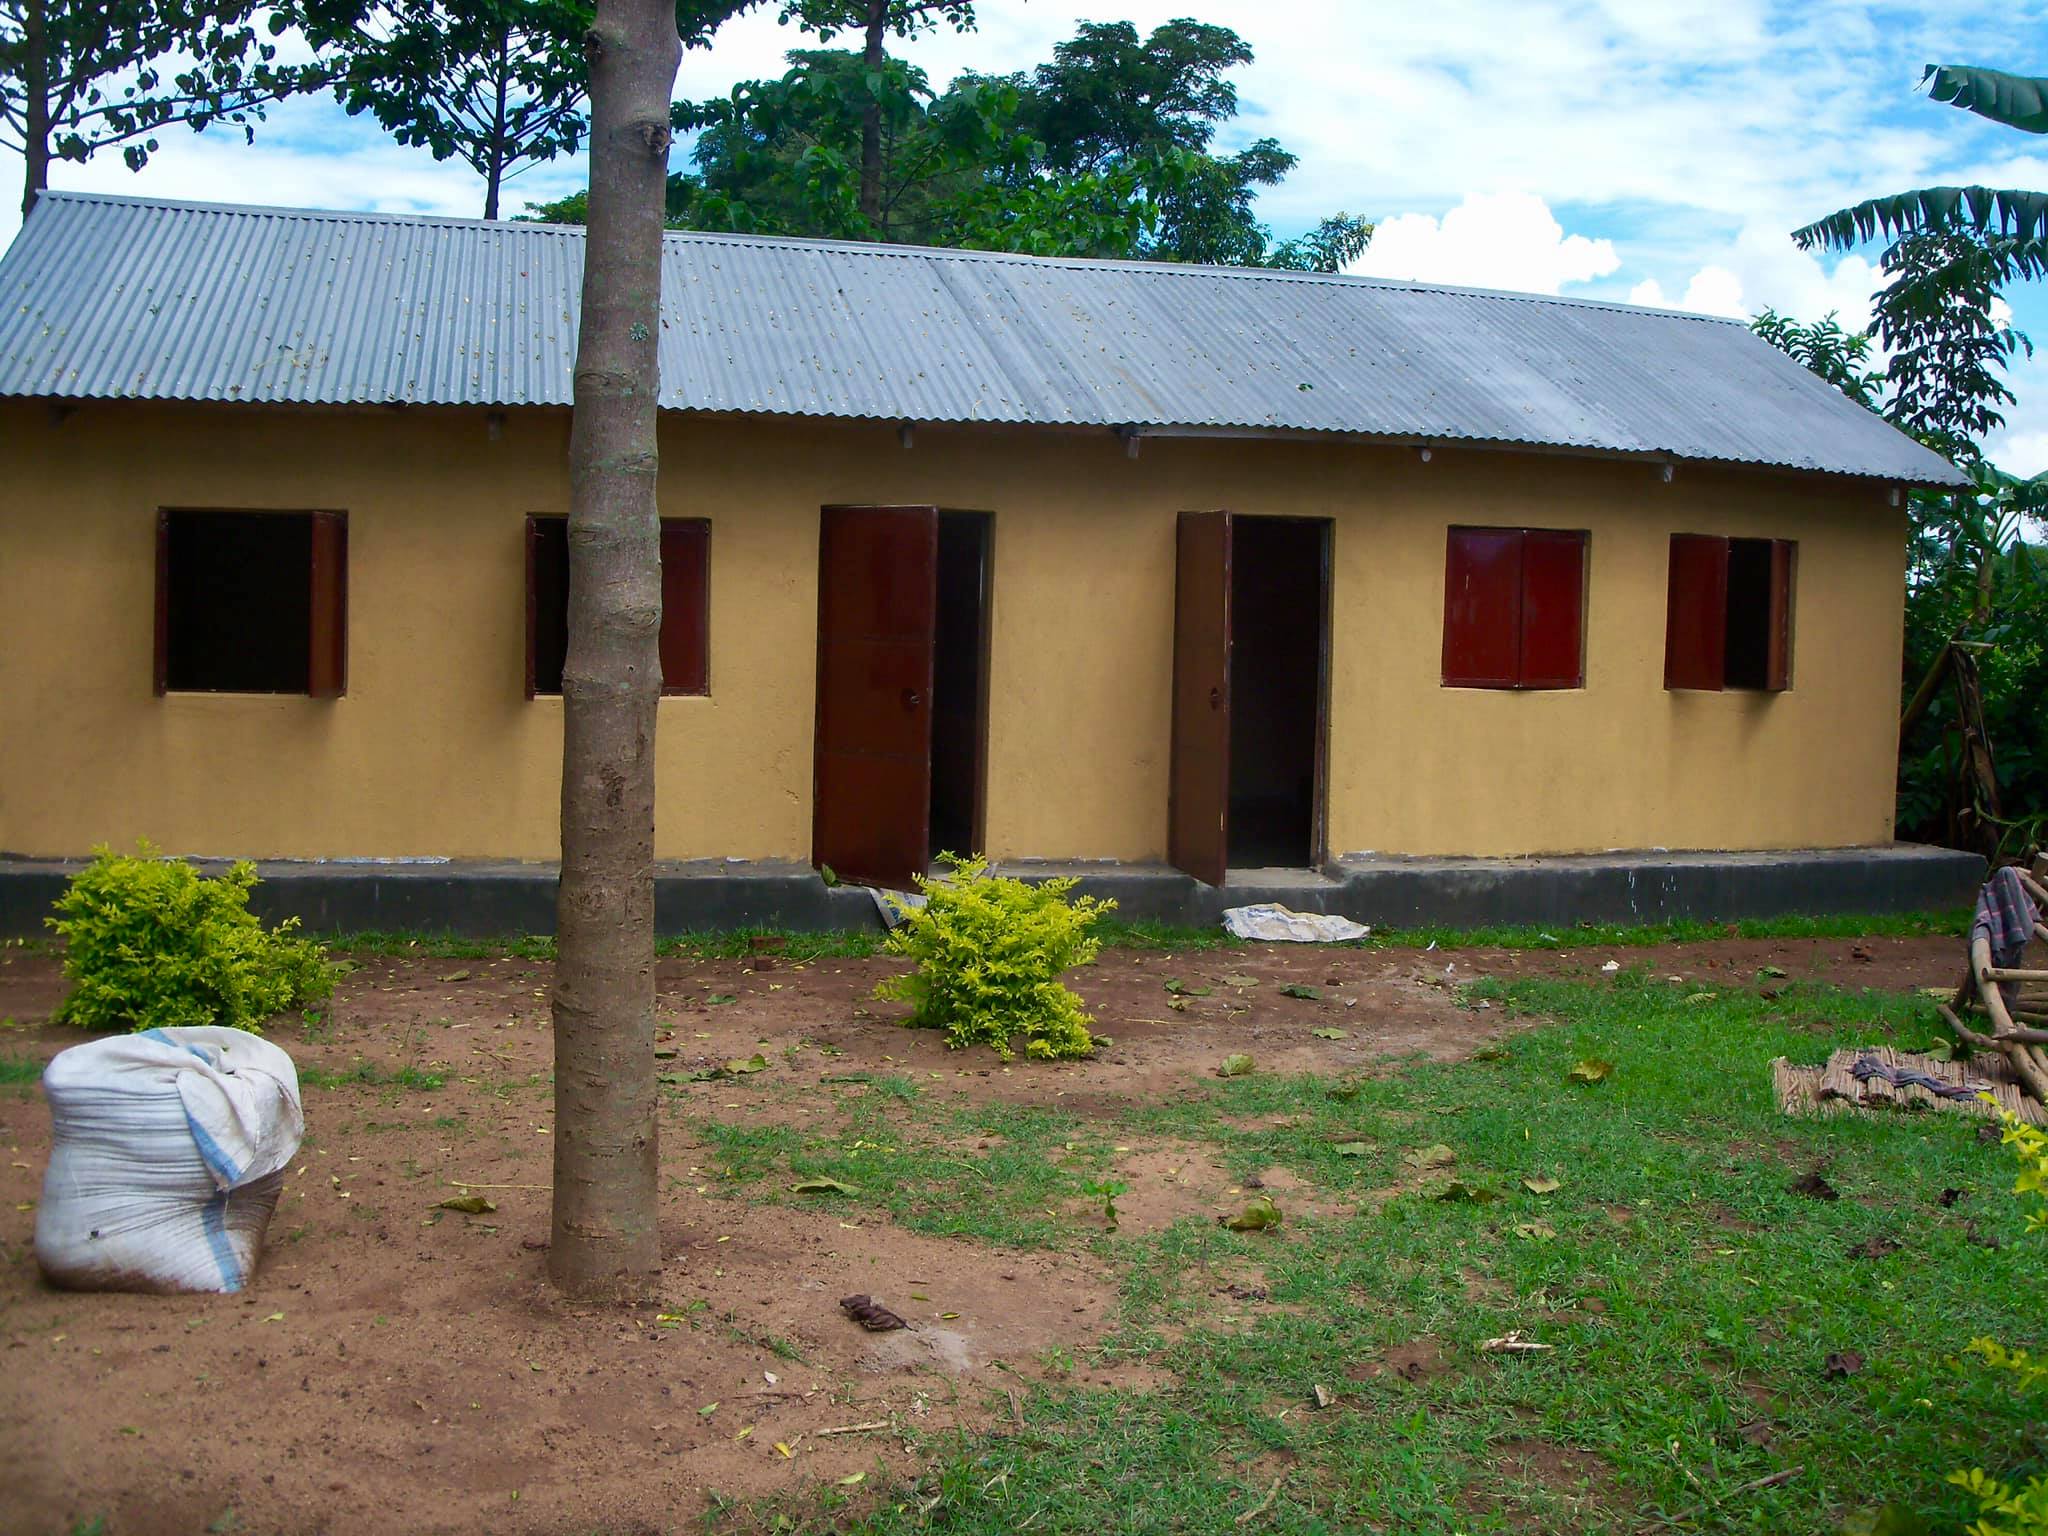 The Living Word Primary School - Uganda